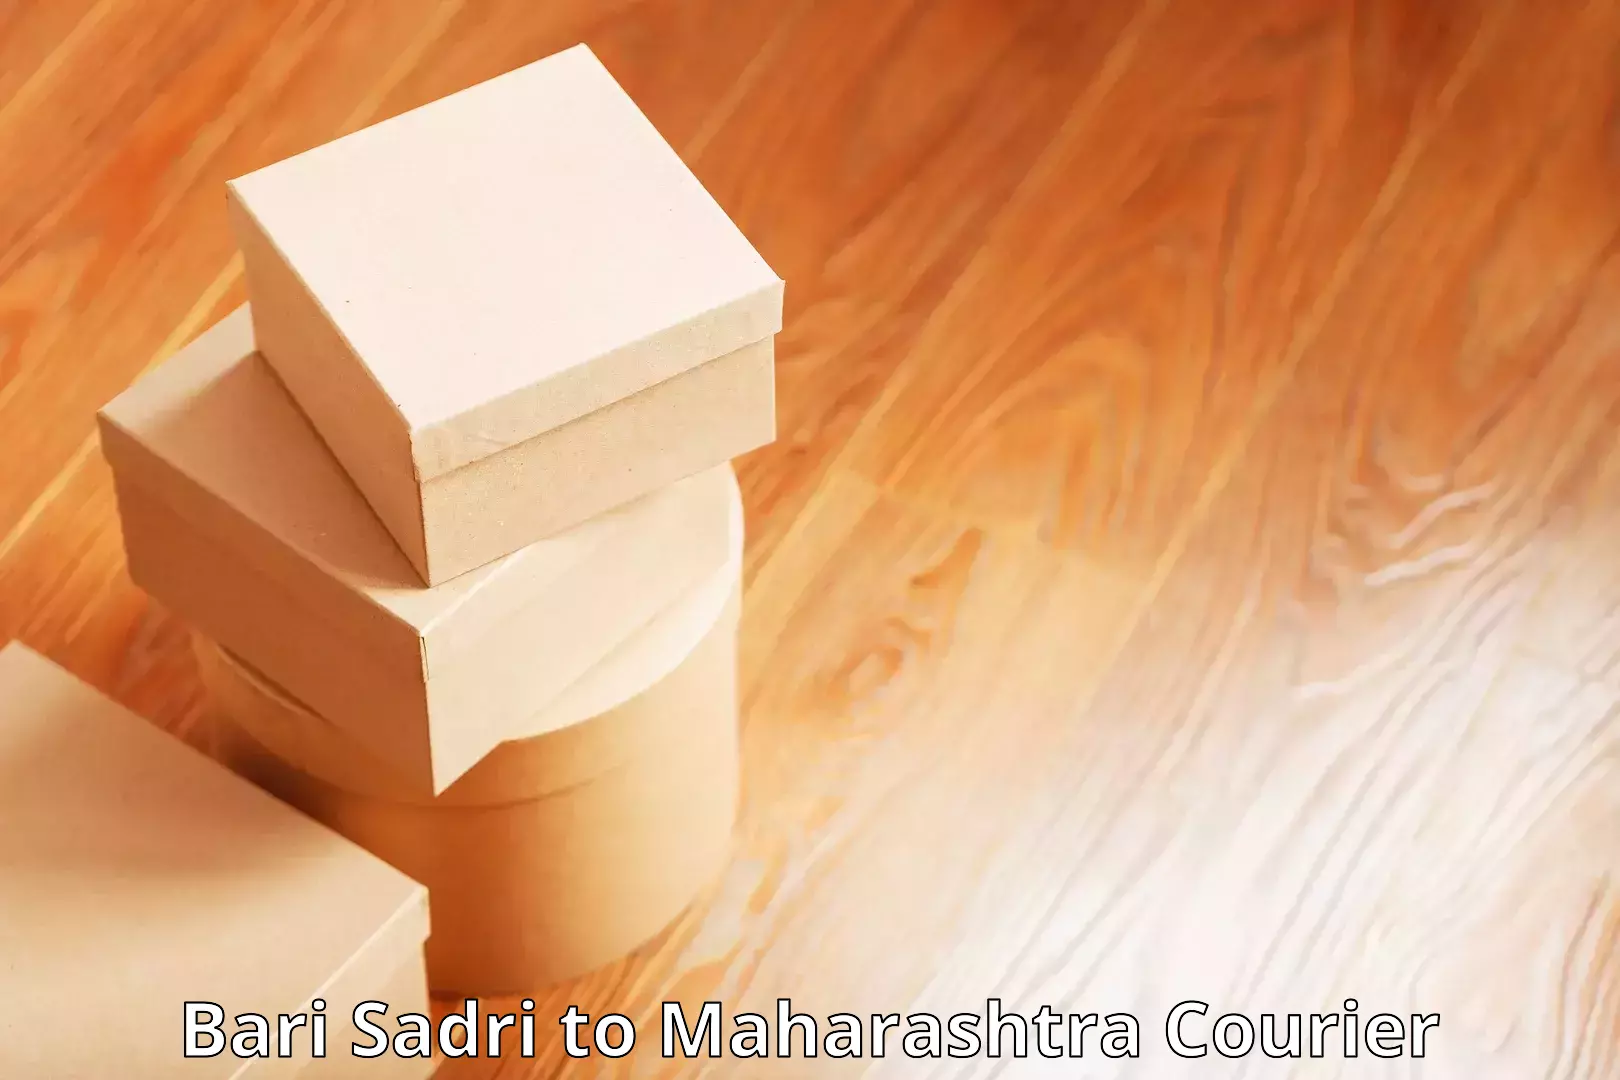 High-priority parcel service Bari Sadri to Kolhapur